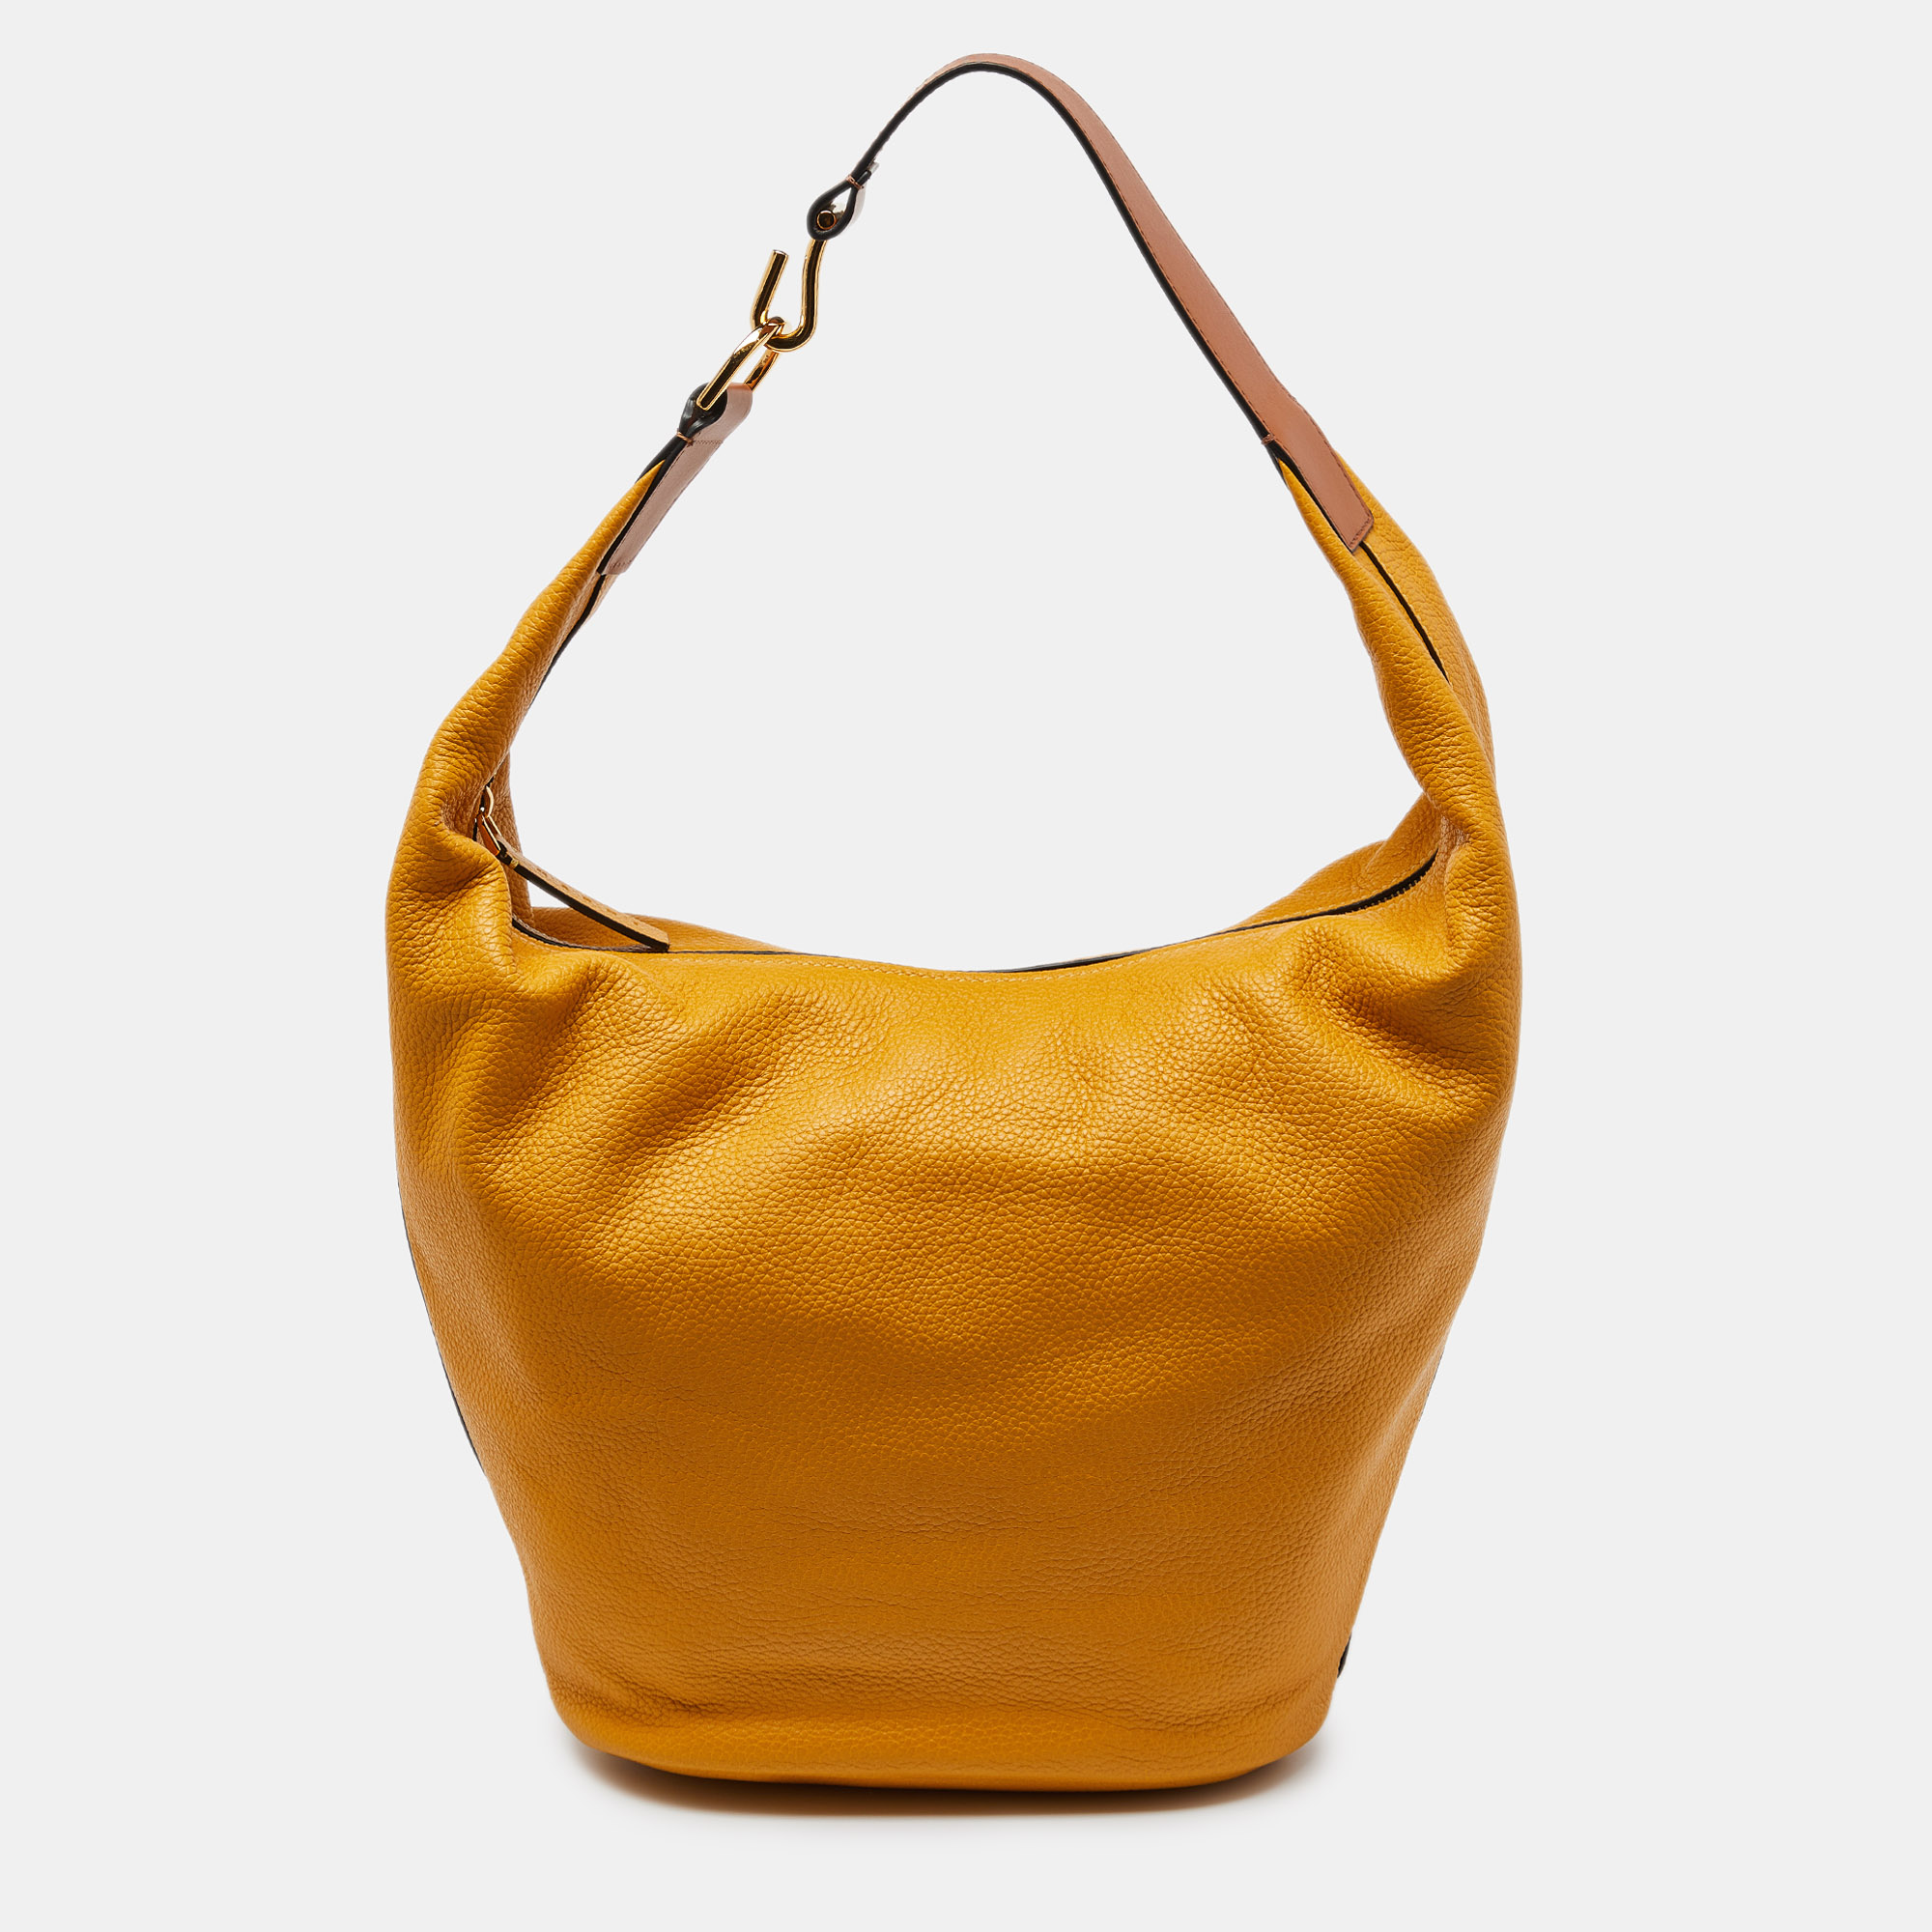 Marni yellow/tan leather zip hobo